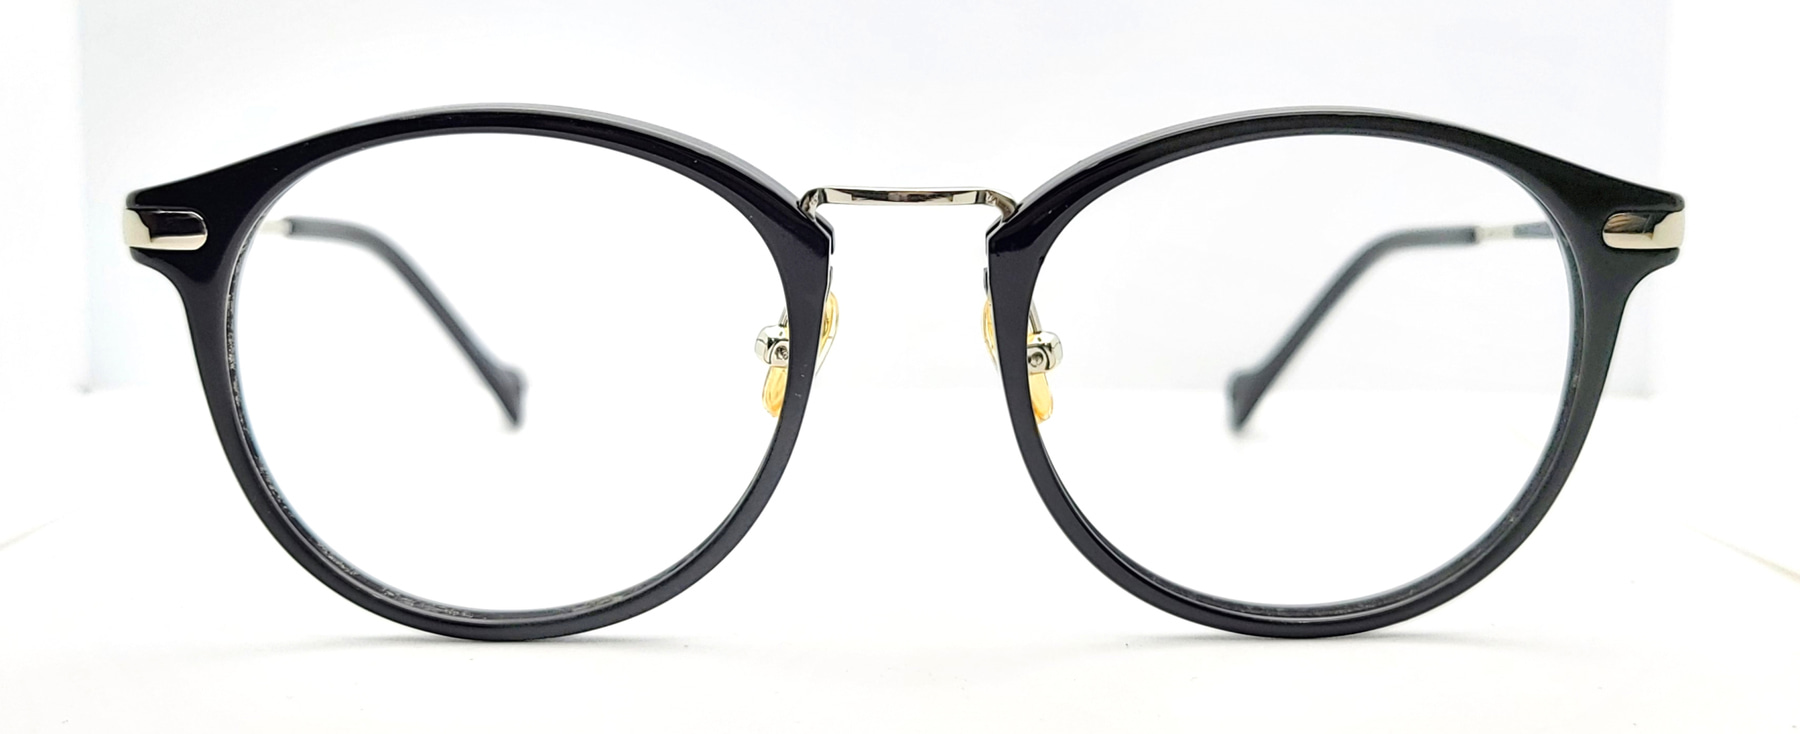 MINIHOUSE M-3018, Korean glasses, sunglasses, eyeglasses, glasses